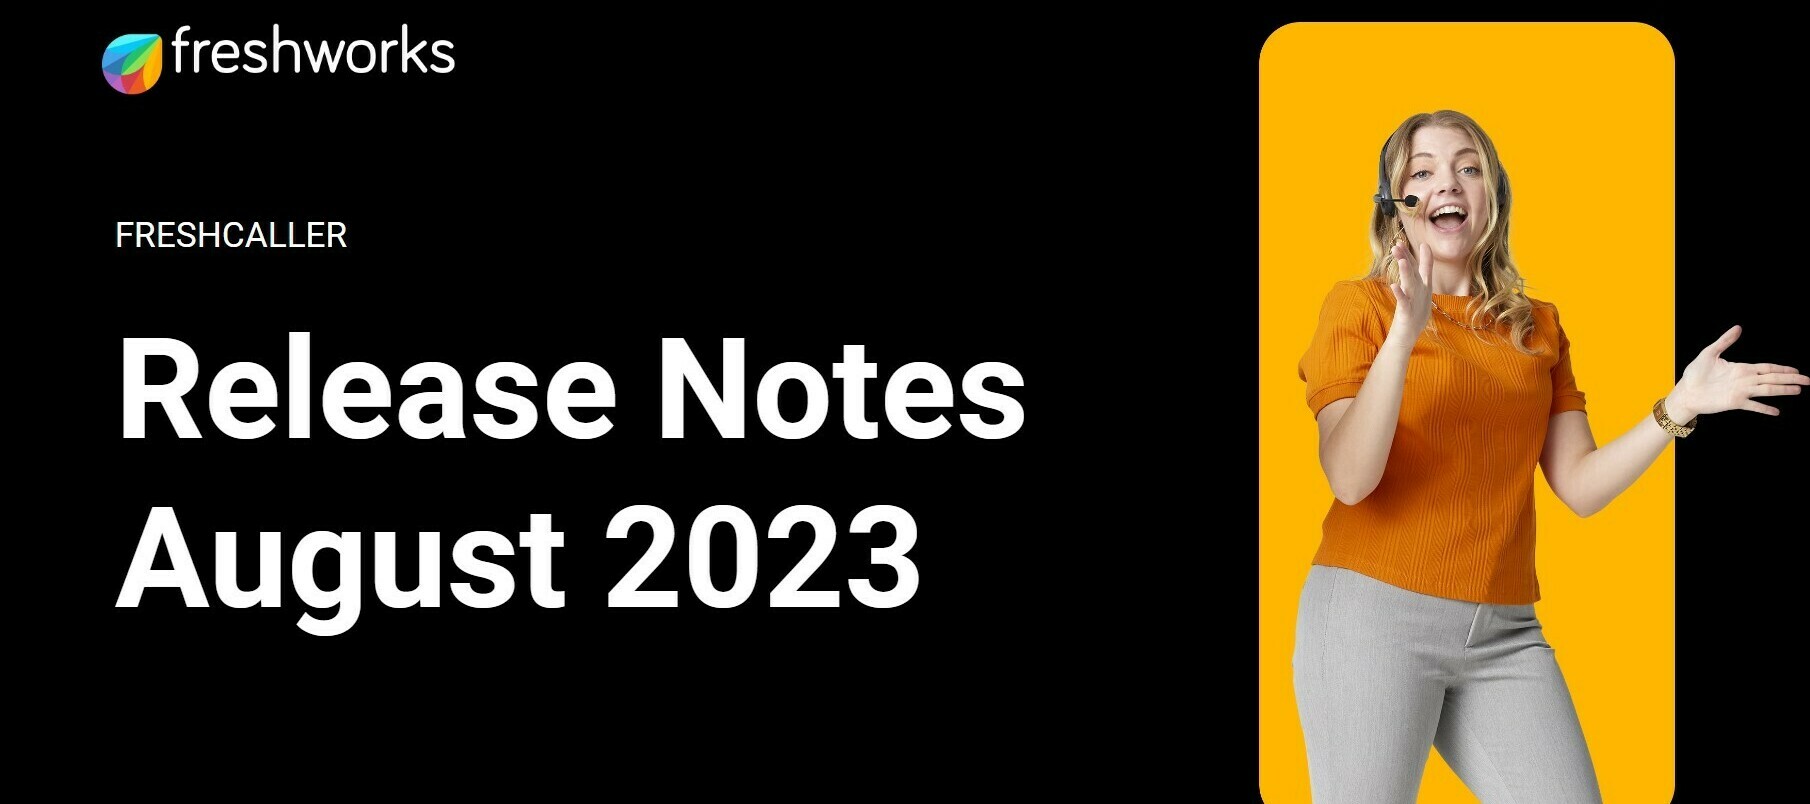 Freshcaller Release Notes - August 2023